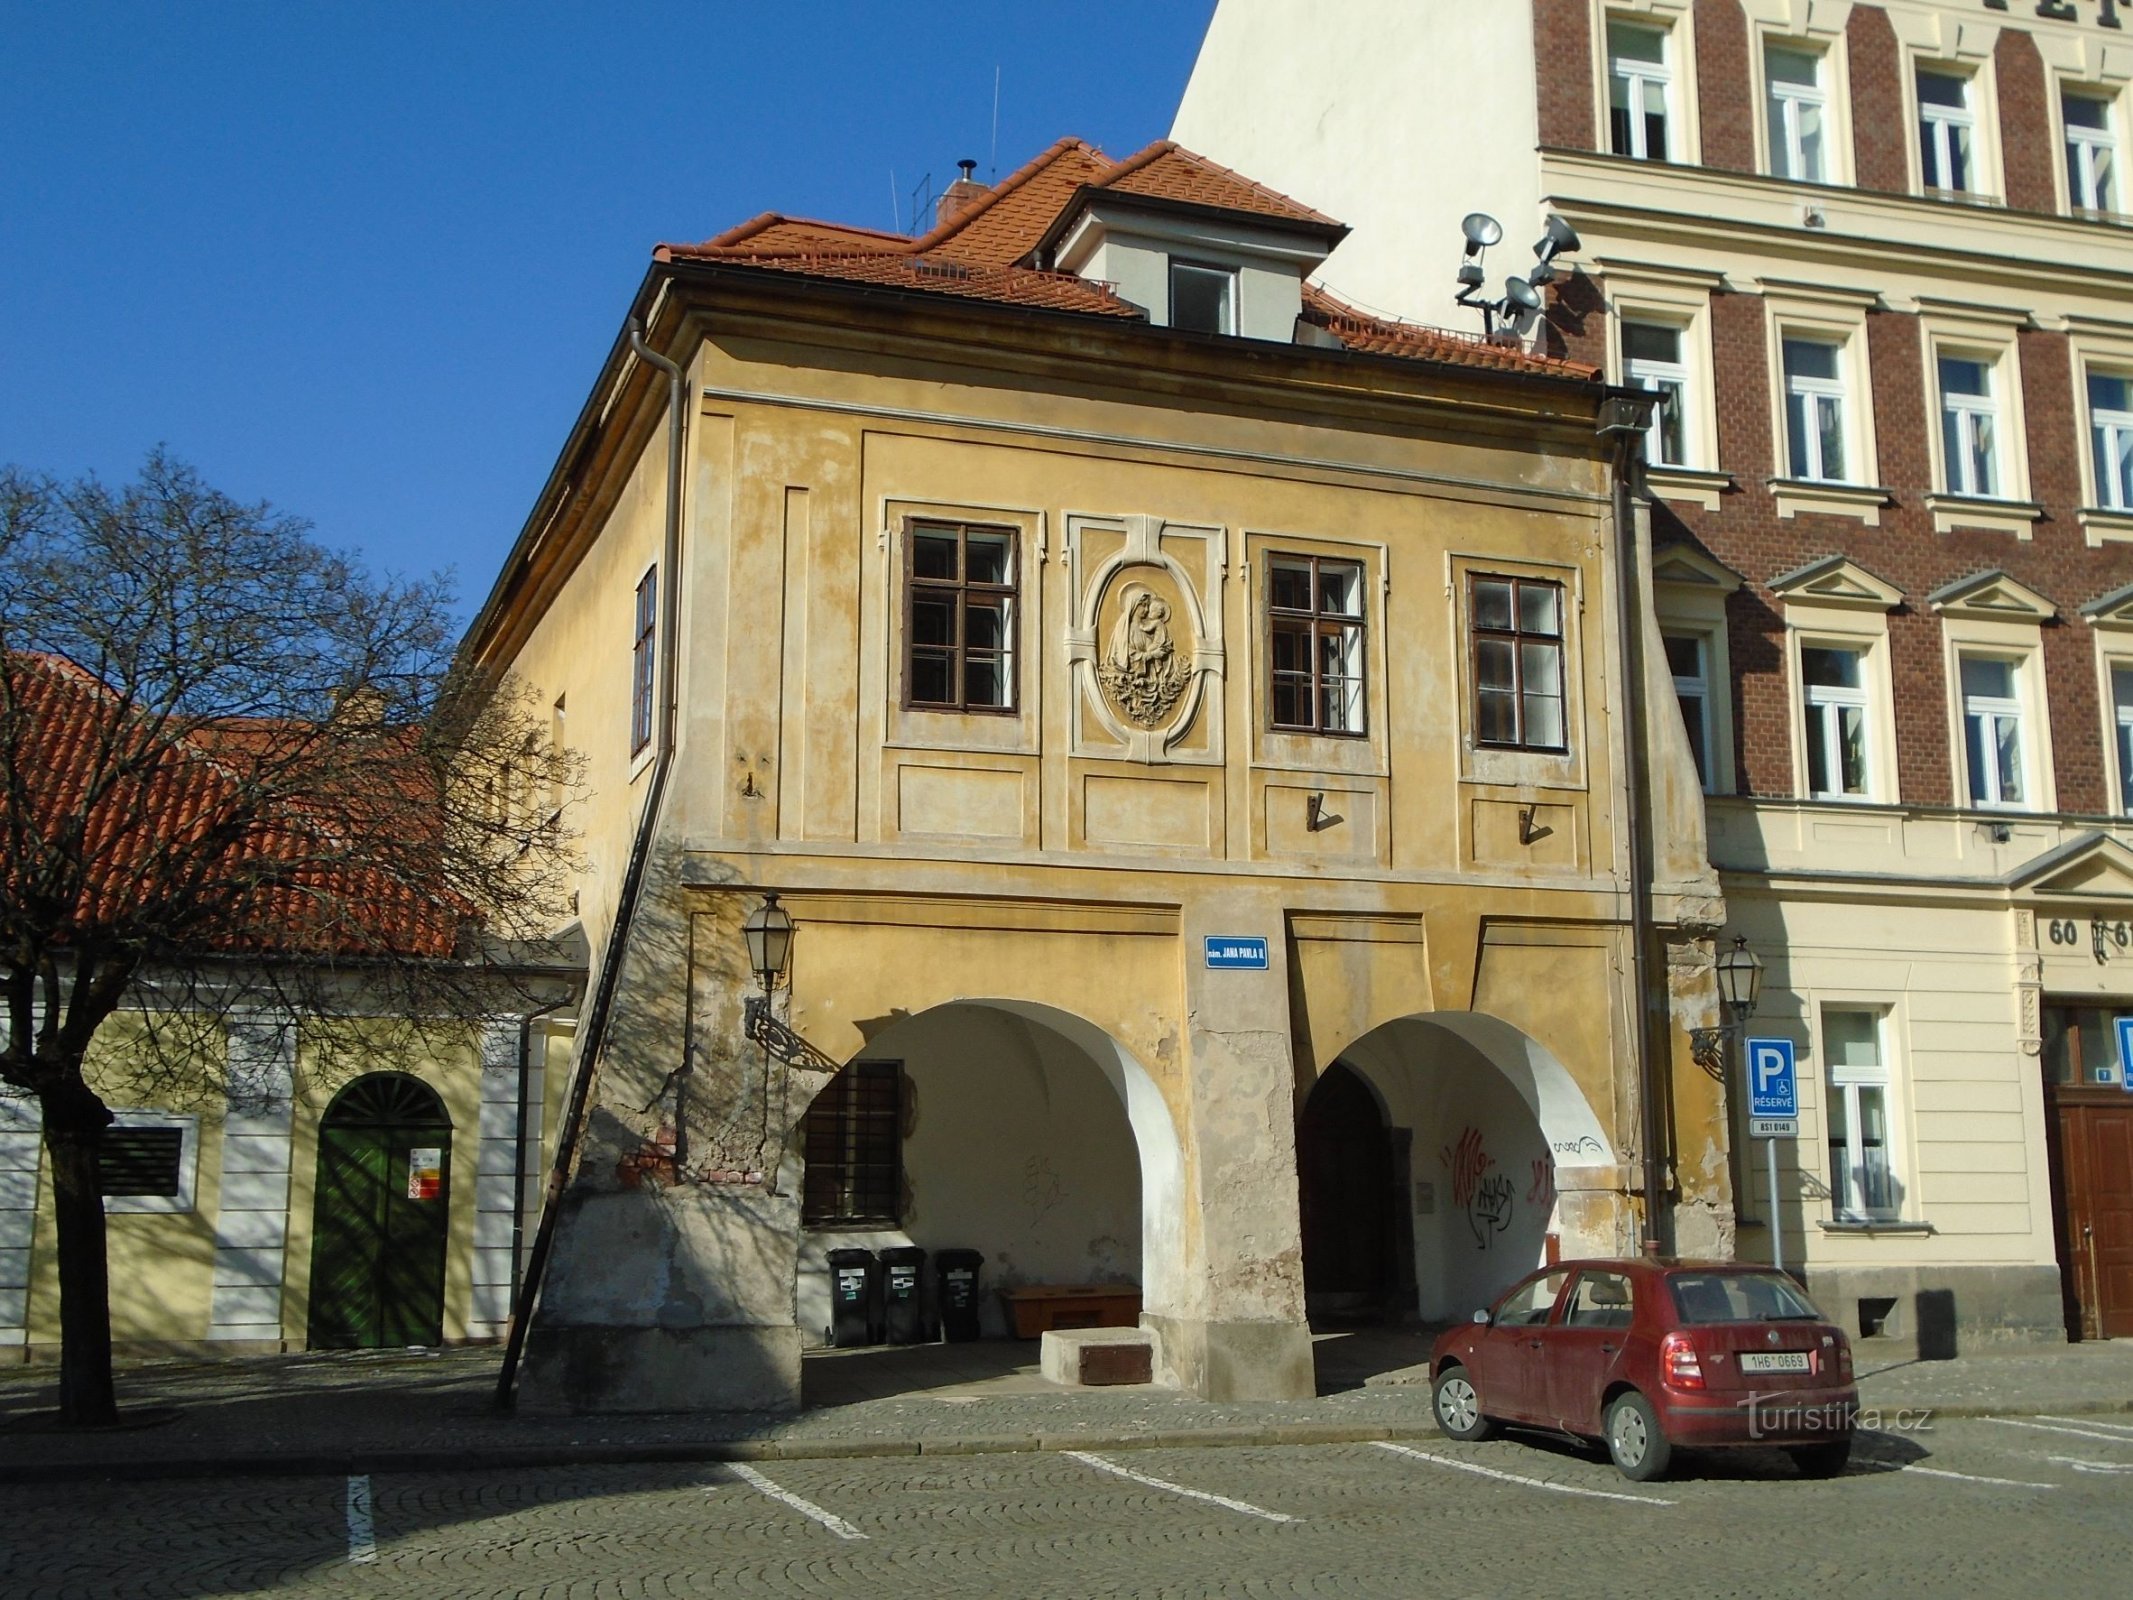 John Paul II Square No. 59 (Hradec Králové, 22.2.2018 August XNUMX)